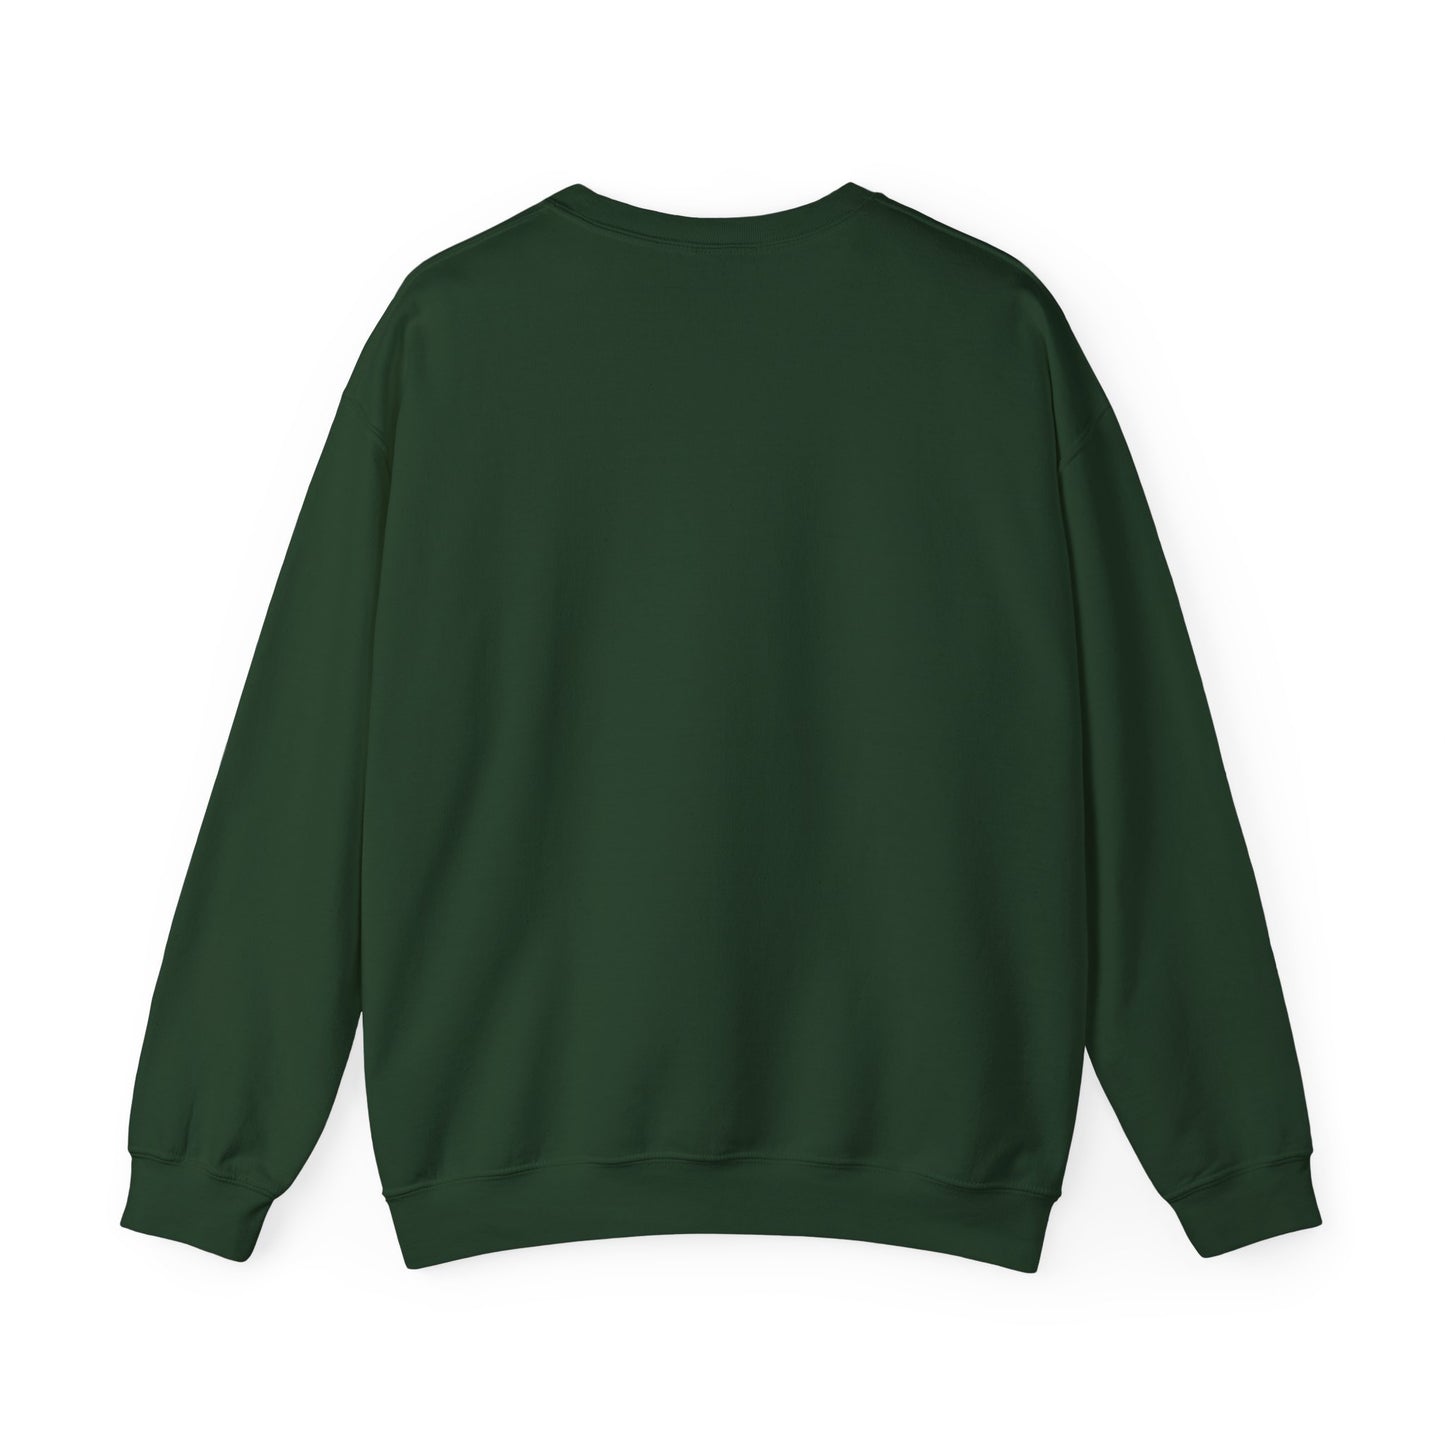 Saved Wife Unisex Heavy Blend™ Crewneck Sweatshirt